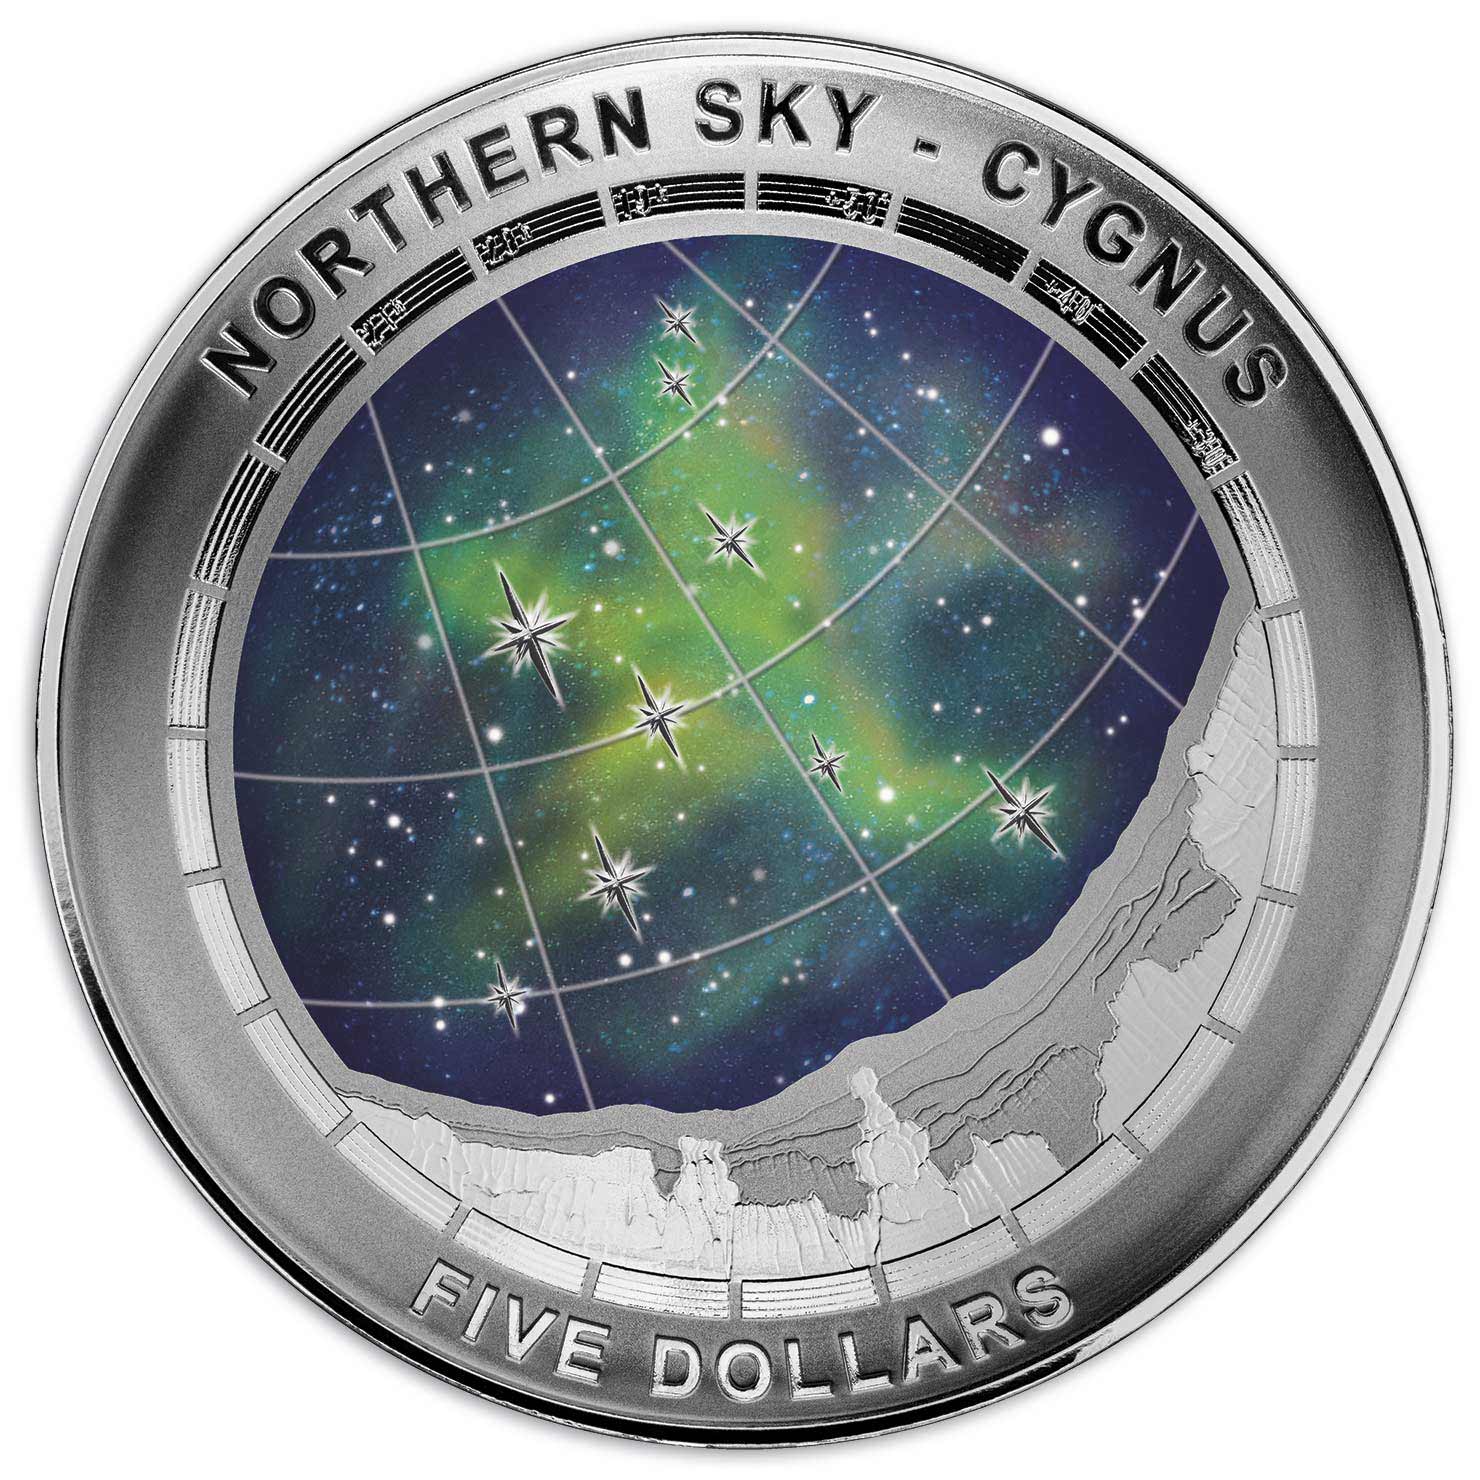 northern sky cygnus coin